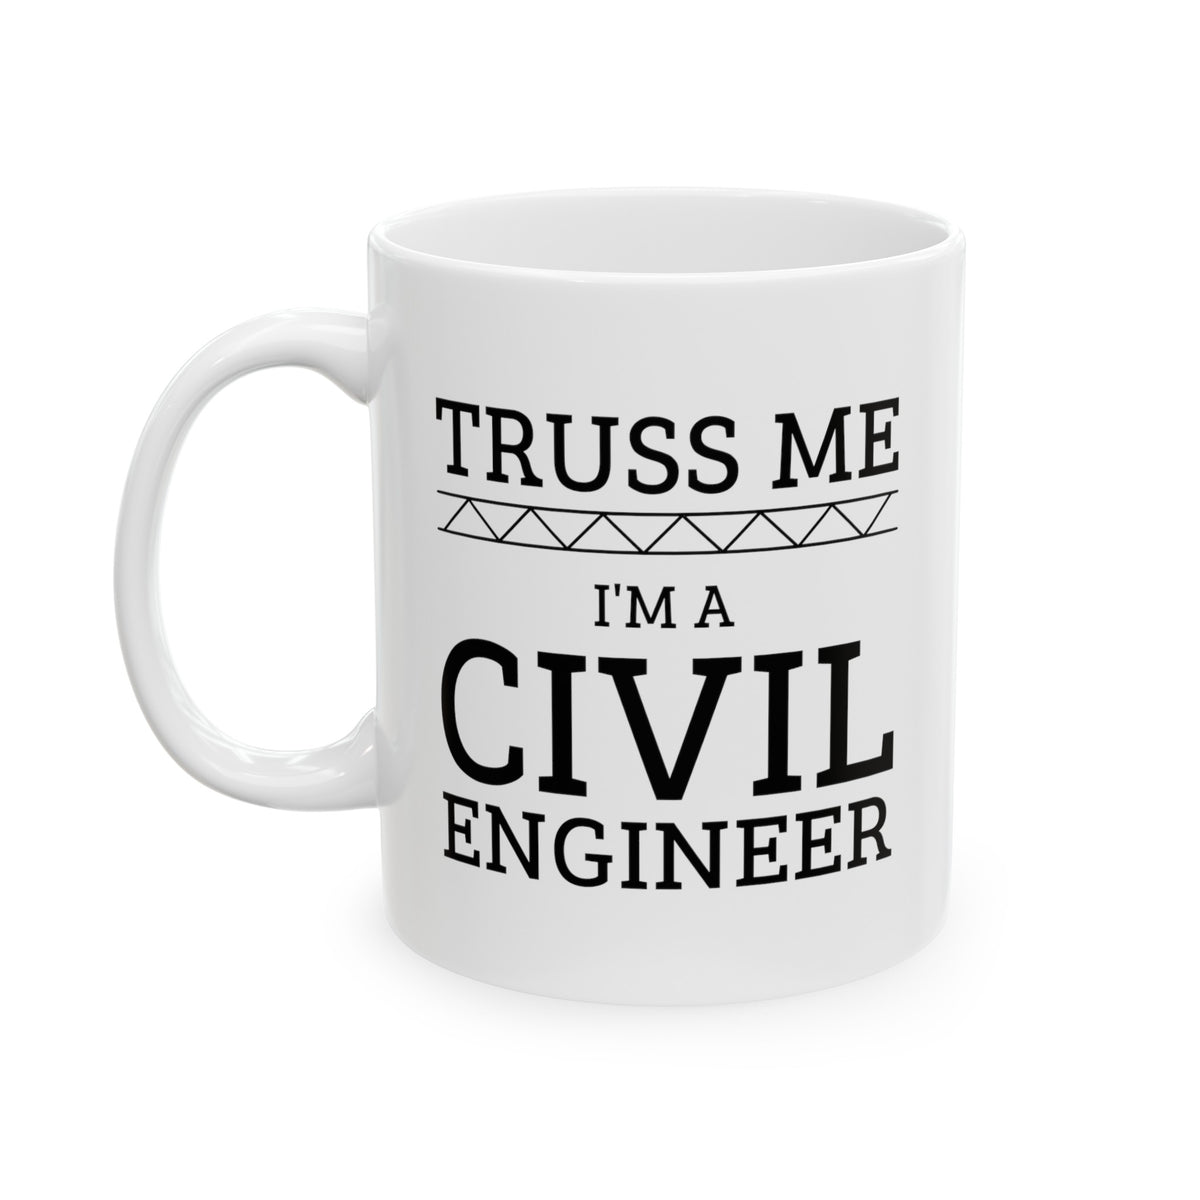 Engineer Coffee Mug - Truss me I'm an Engineer - Funny Engineering Gifts For Men Women